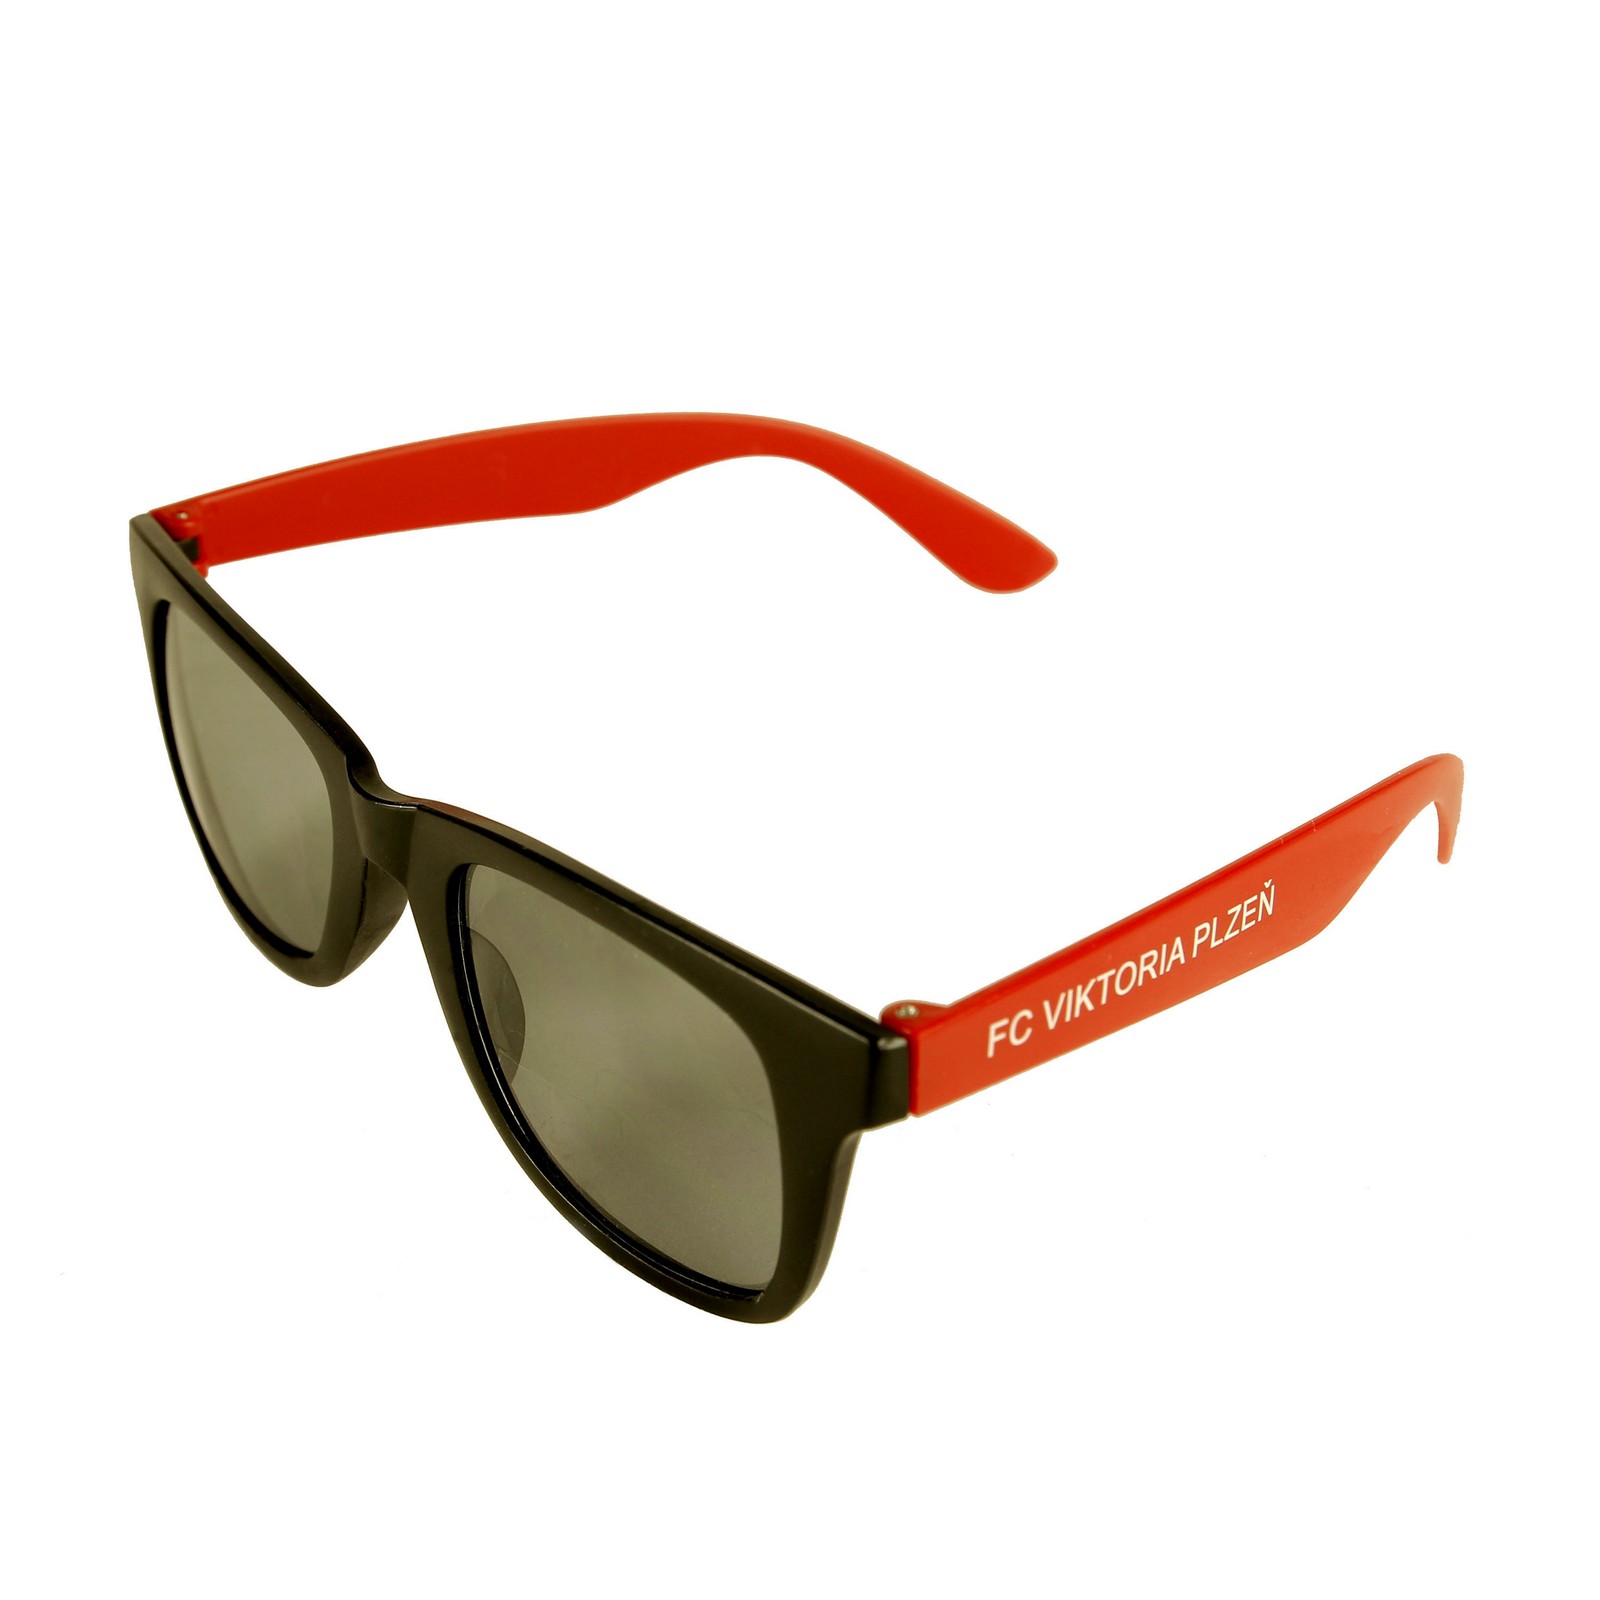 Sunglasses FC Viktoria Plzeň – red